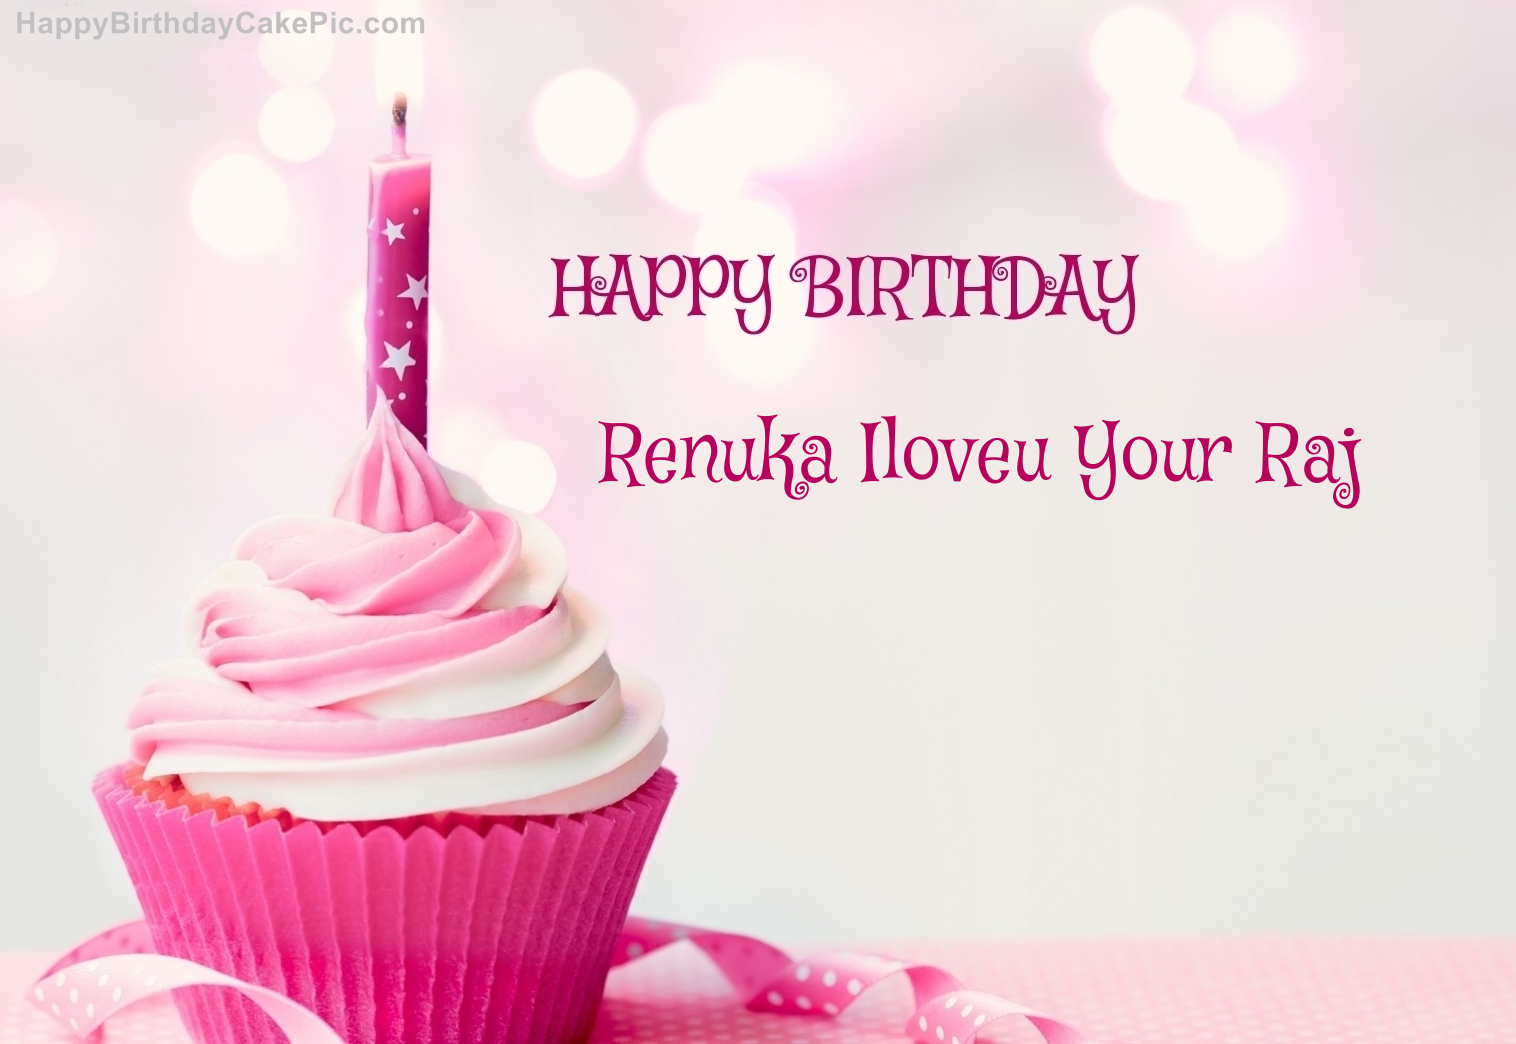 Happy Birthday Renuka Image Wishes✓ - YouTube